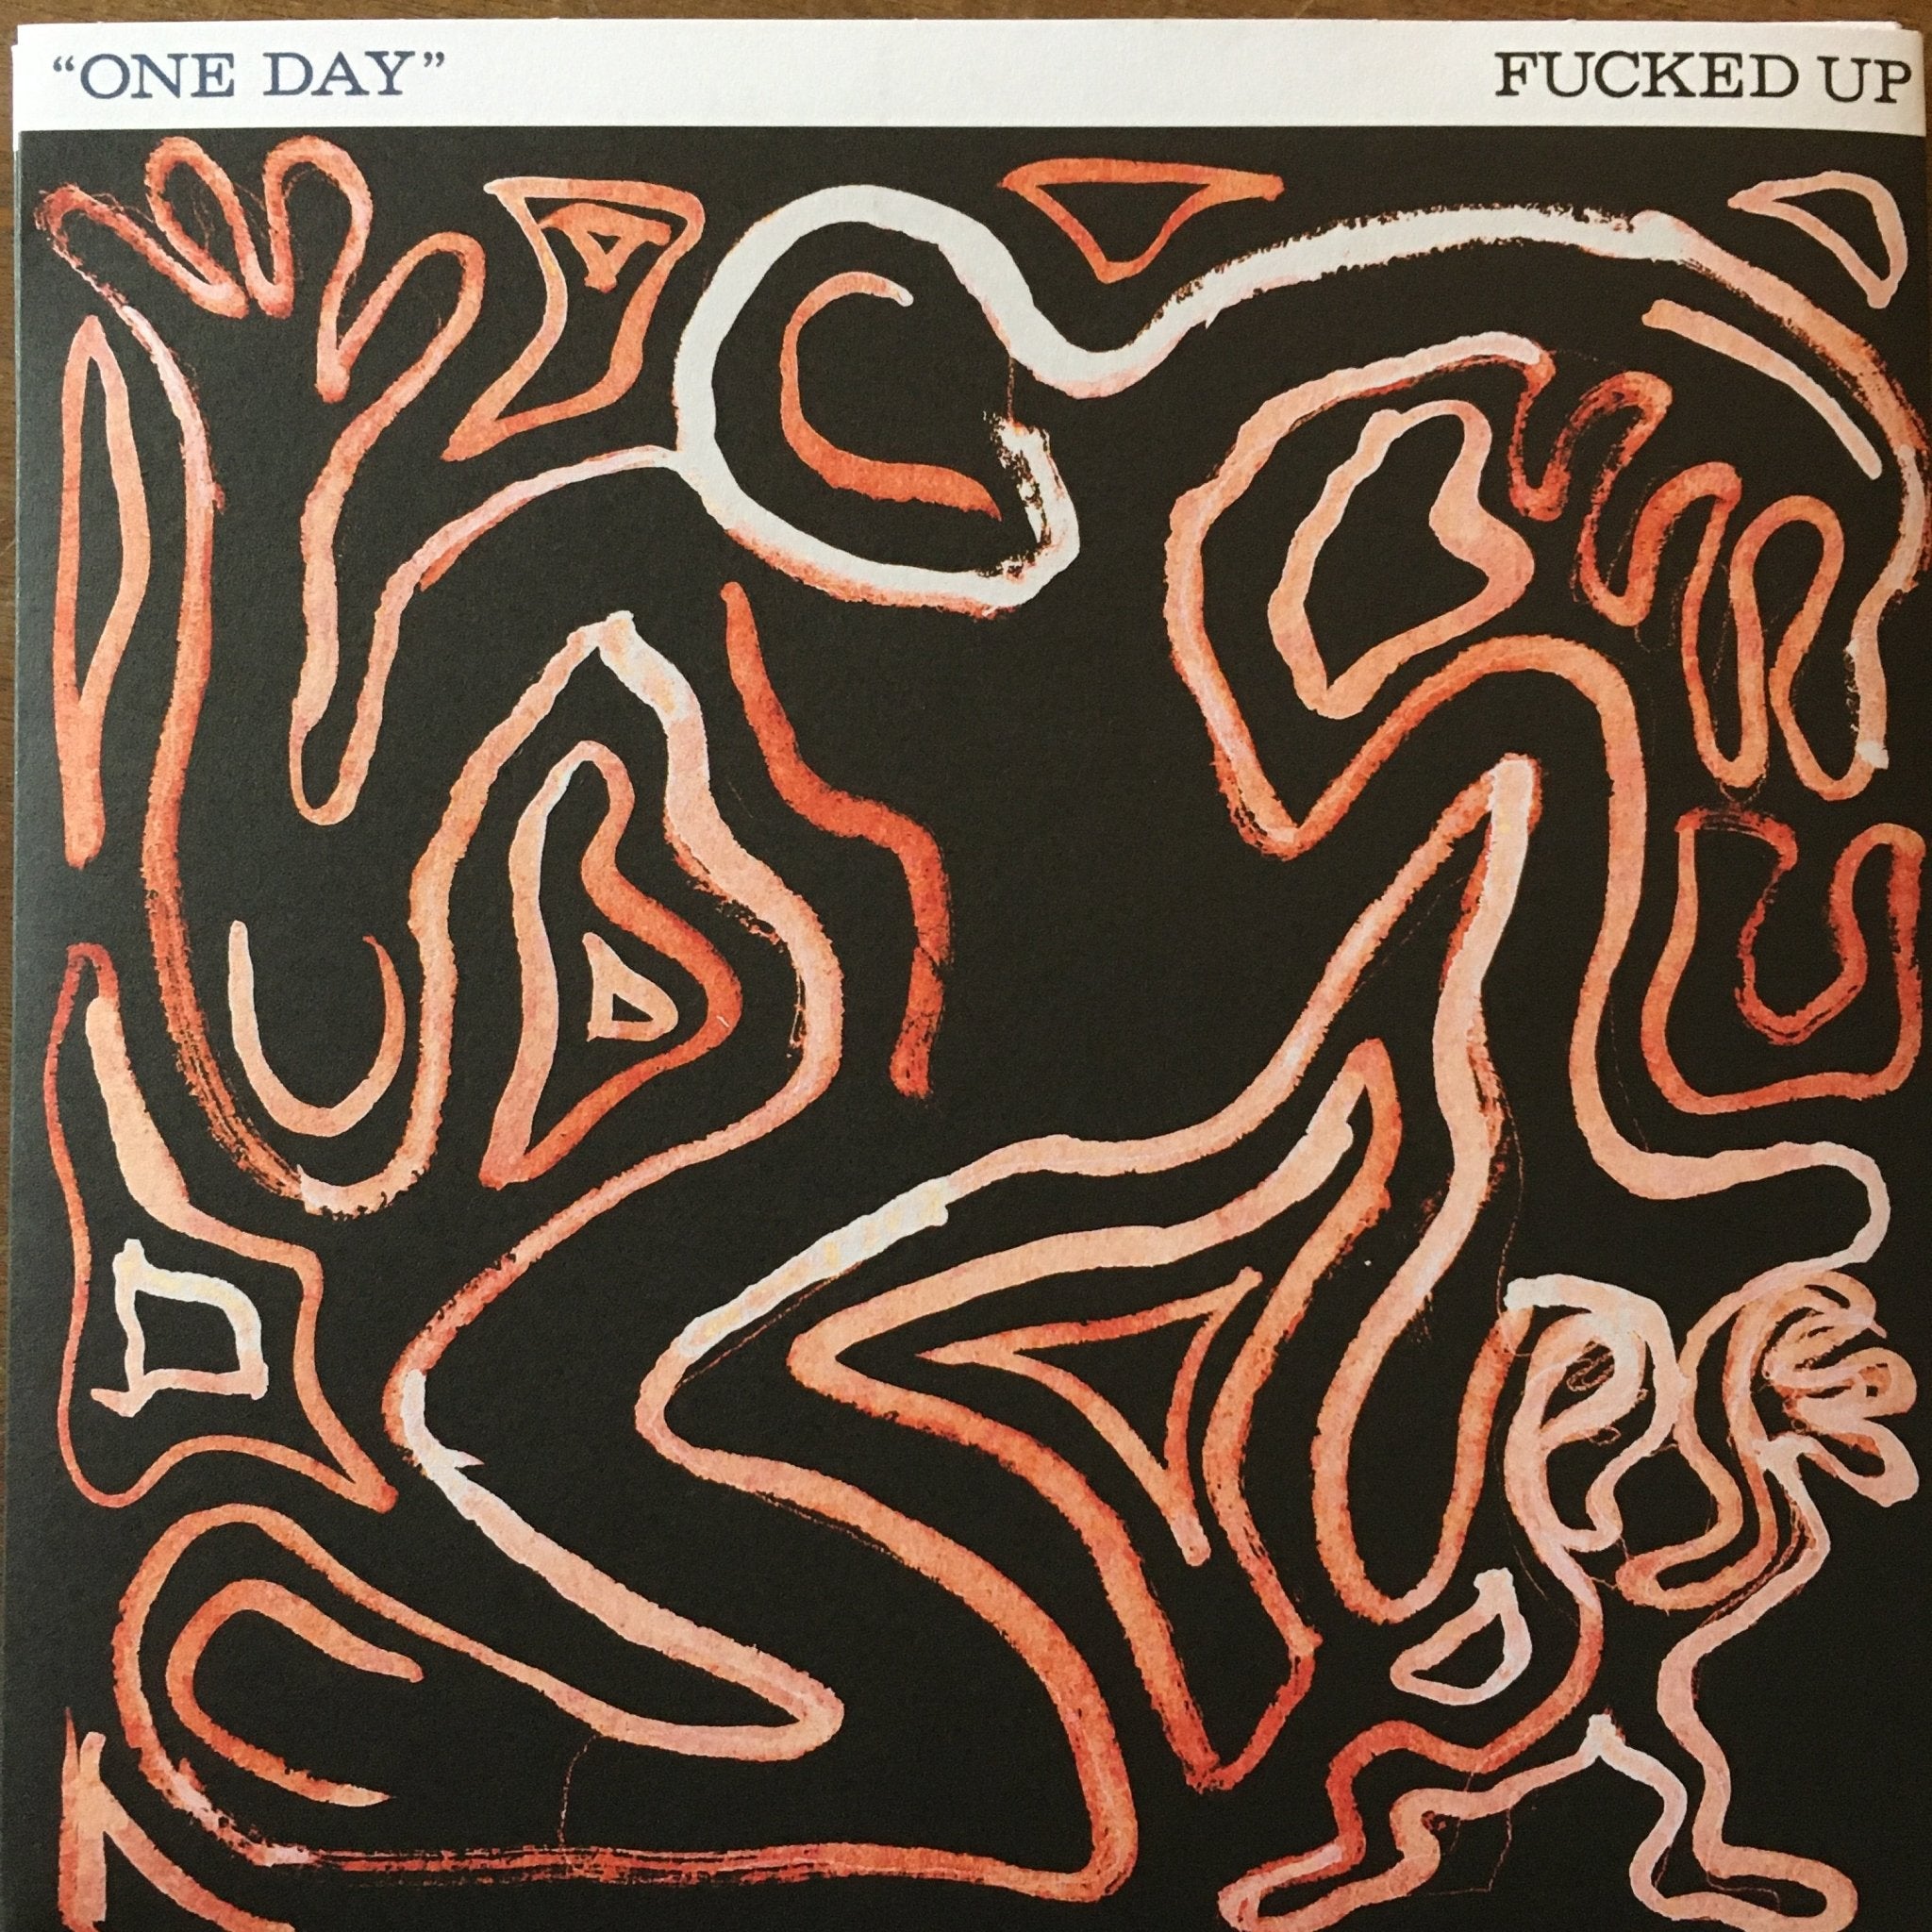 Fucked Up - One Day 7" - Vinyl - Fucked Up